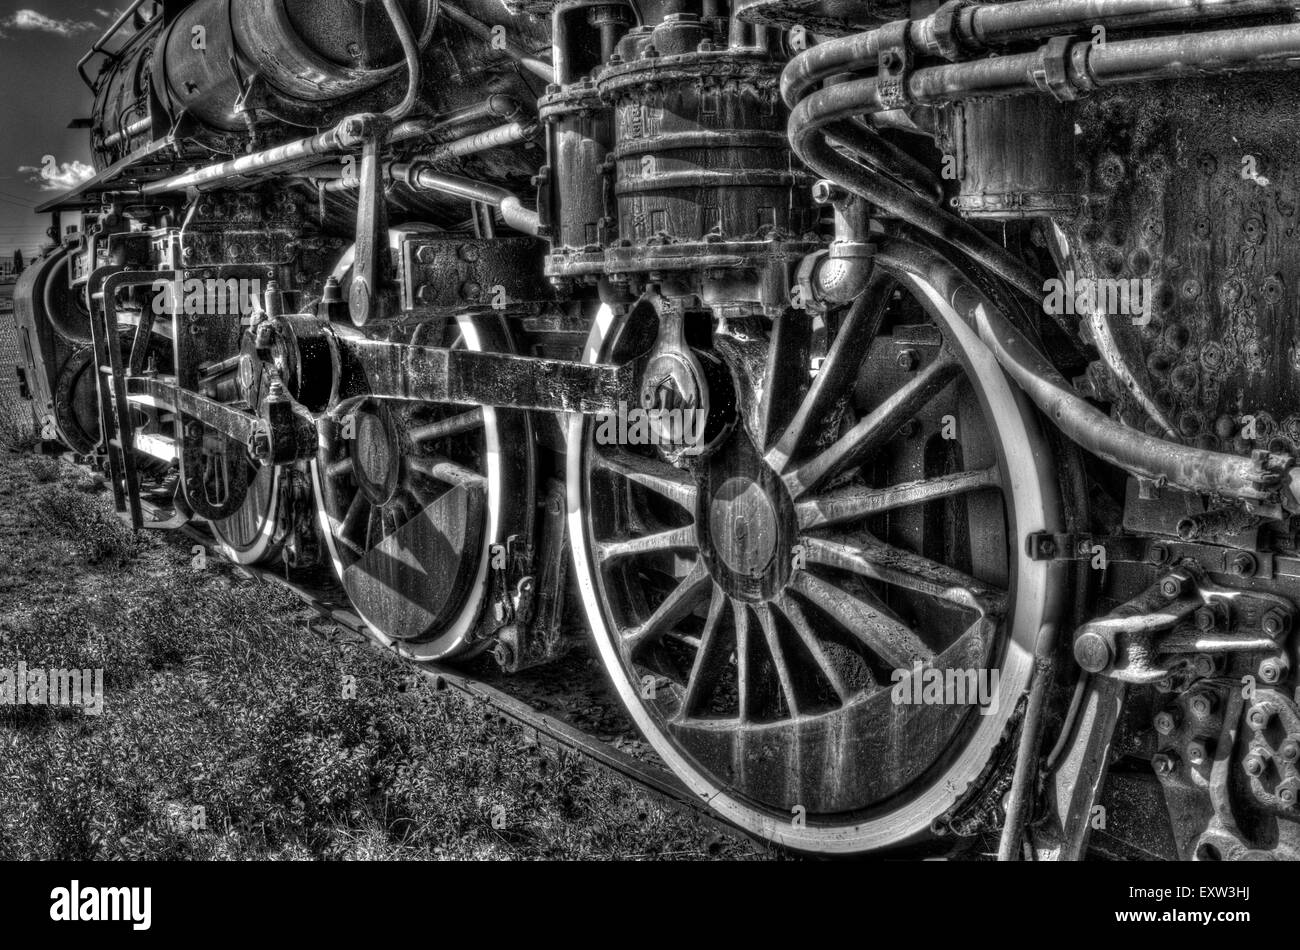 A litho treatment of a steam locomotive Stock Photo